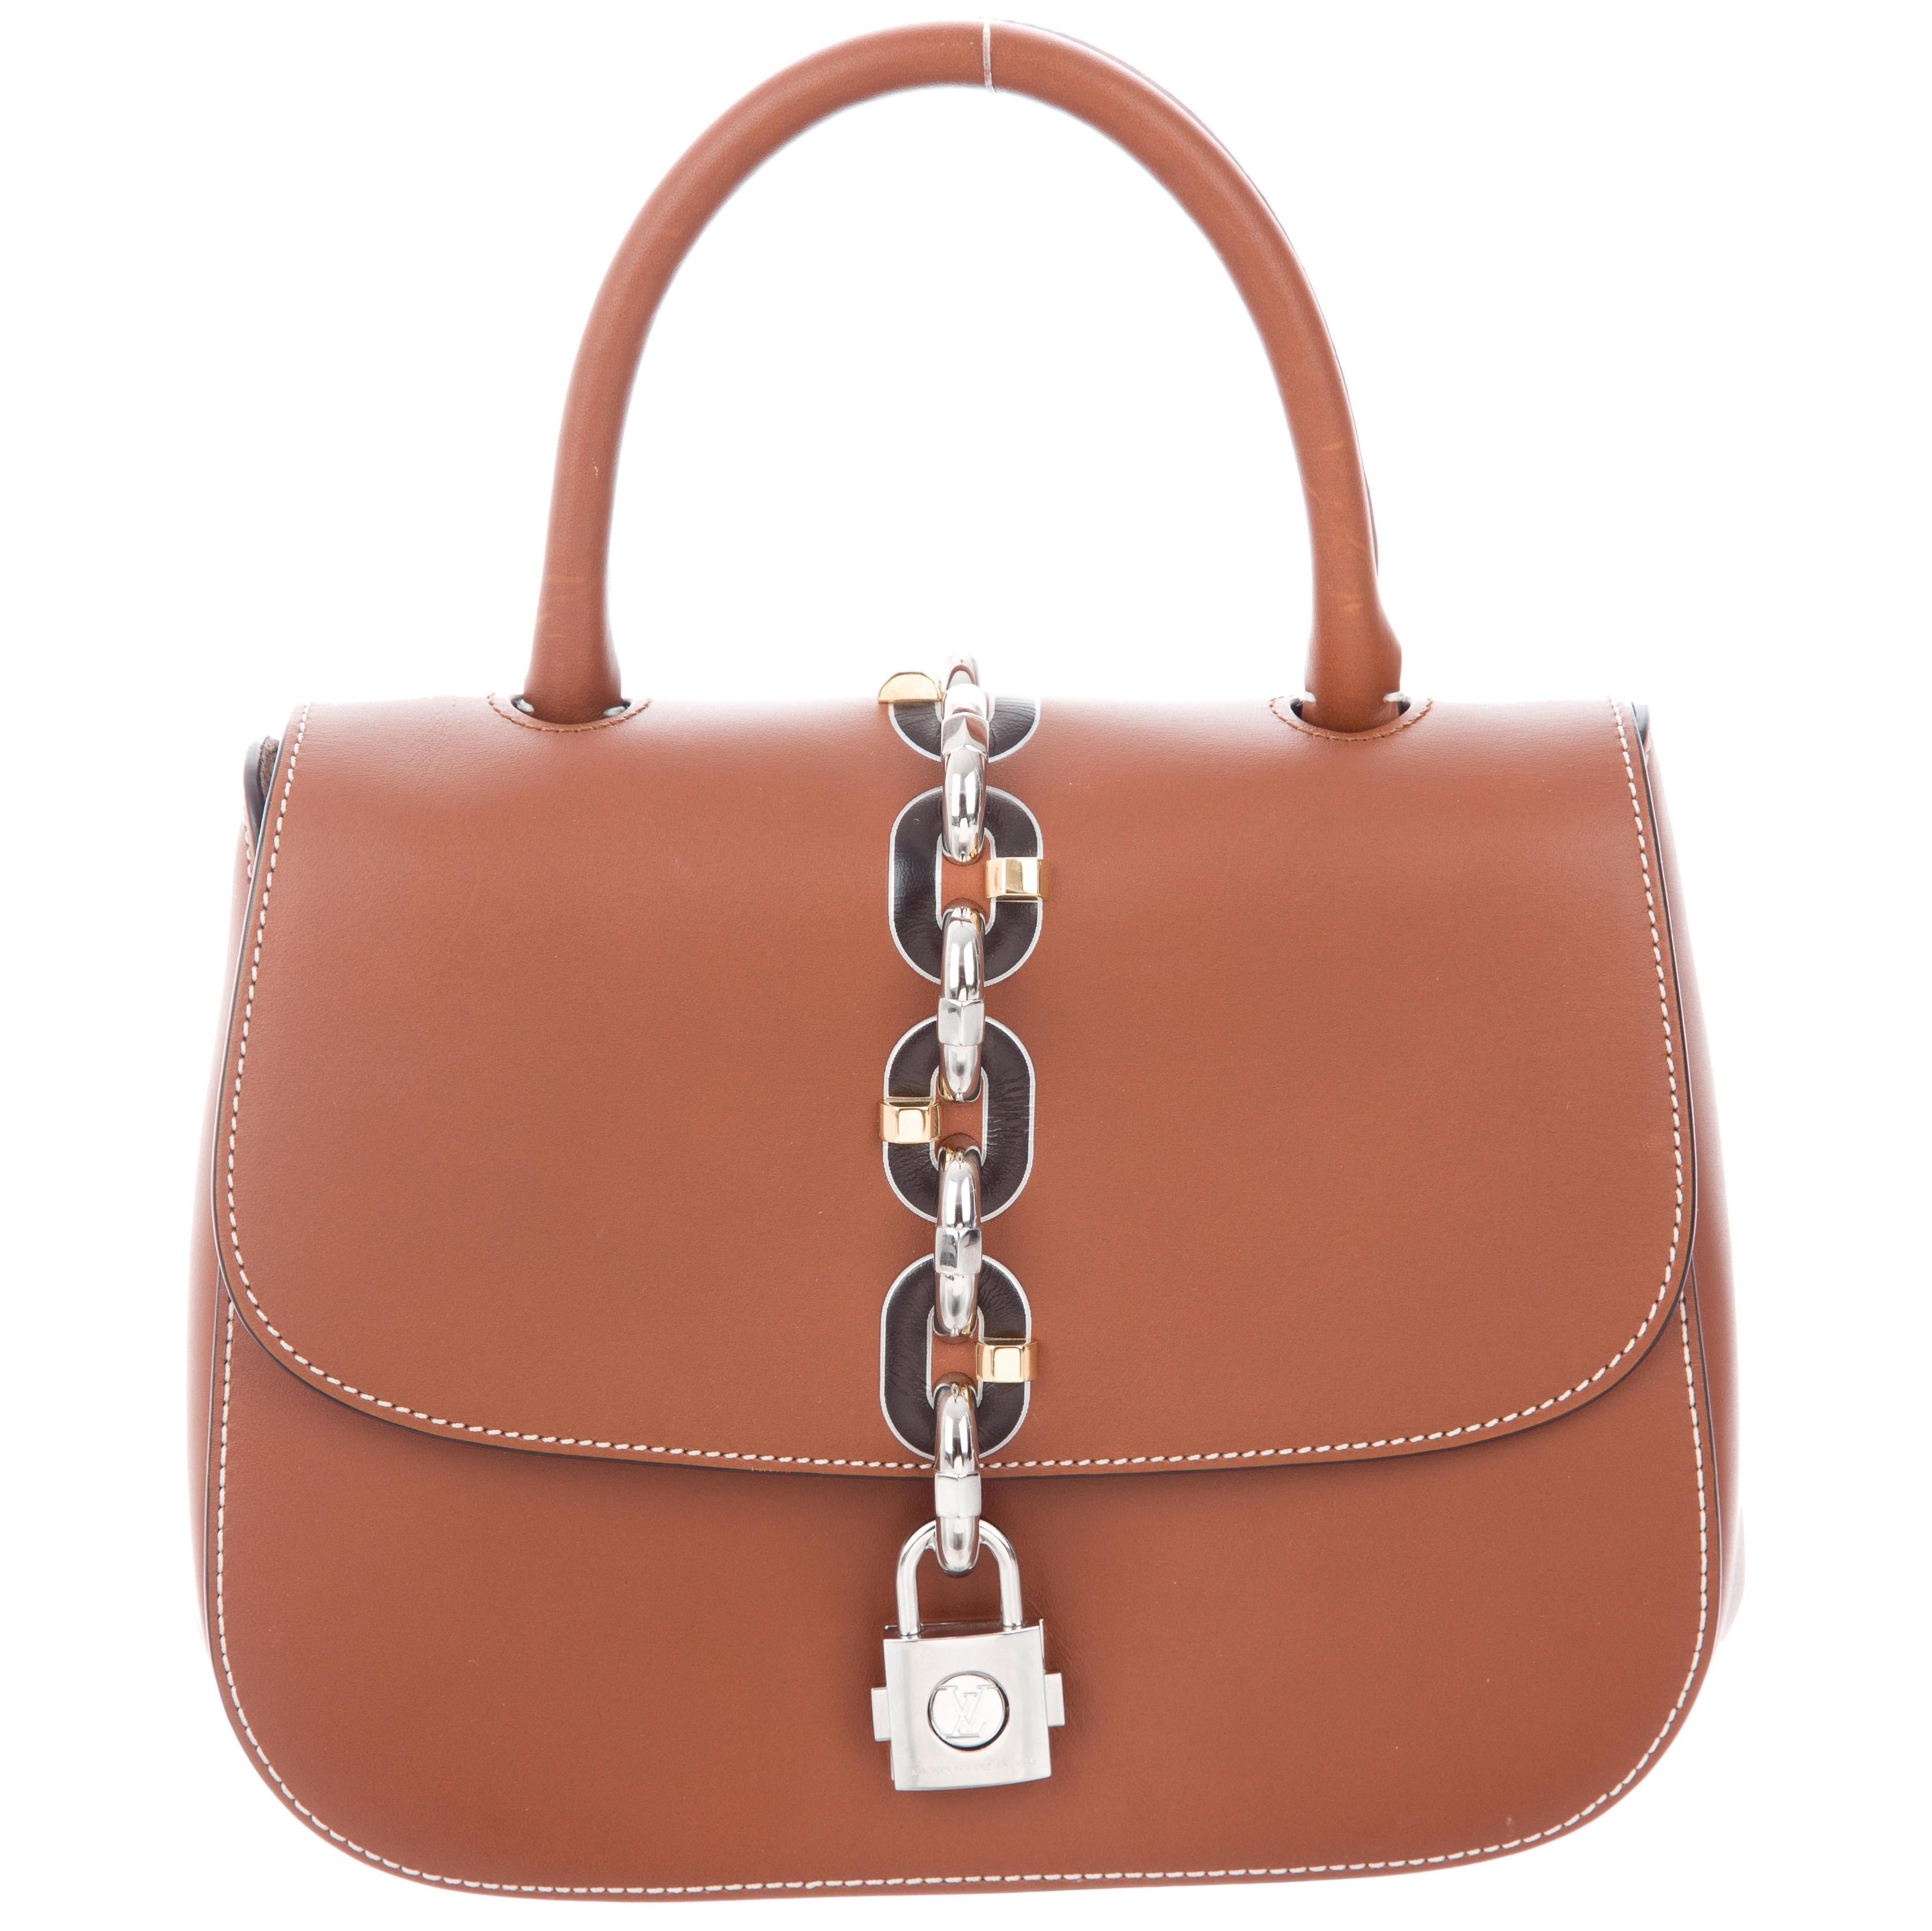 Louis Vuitton New Cognac Leather Kelly Style Top Handle Satchel Evening Flap Bag